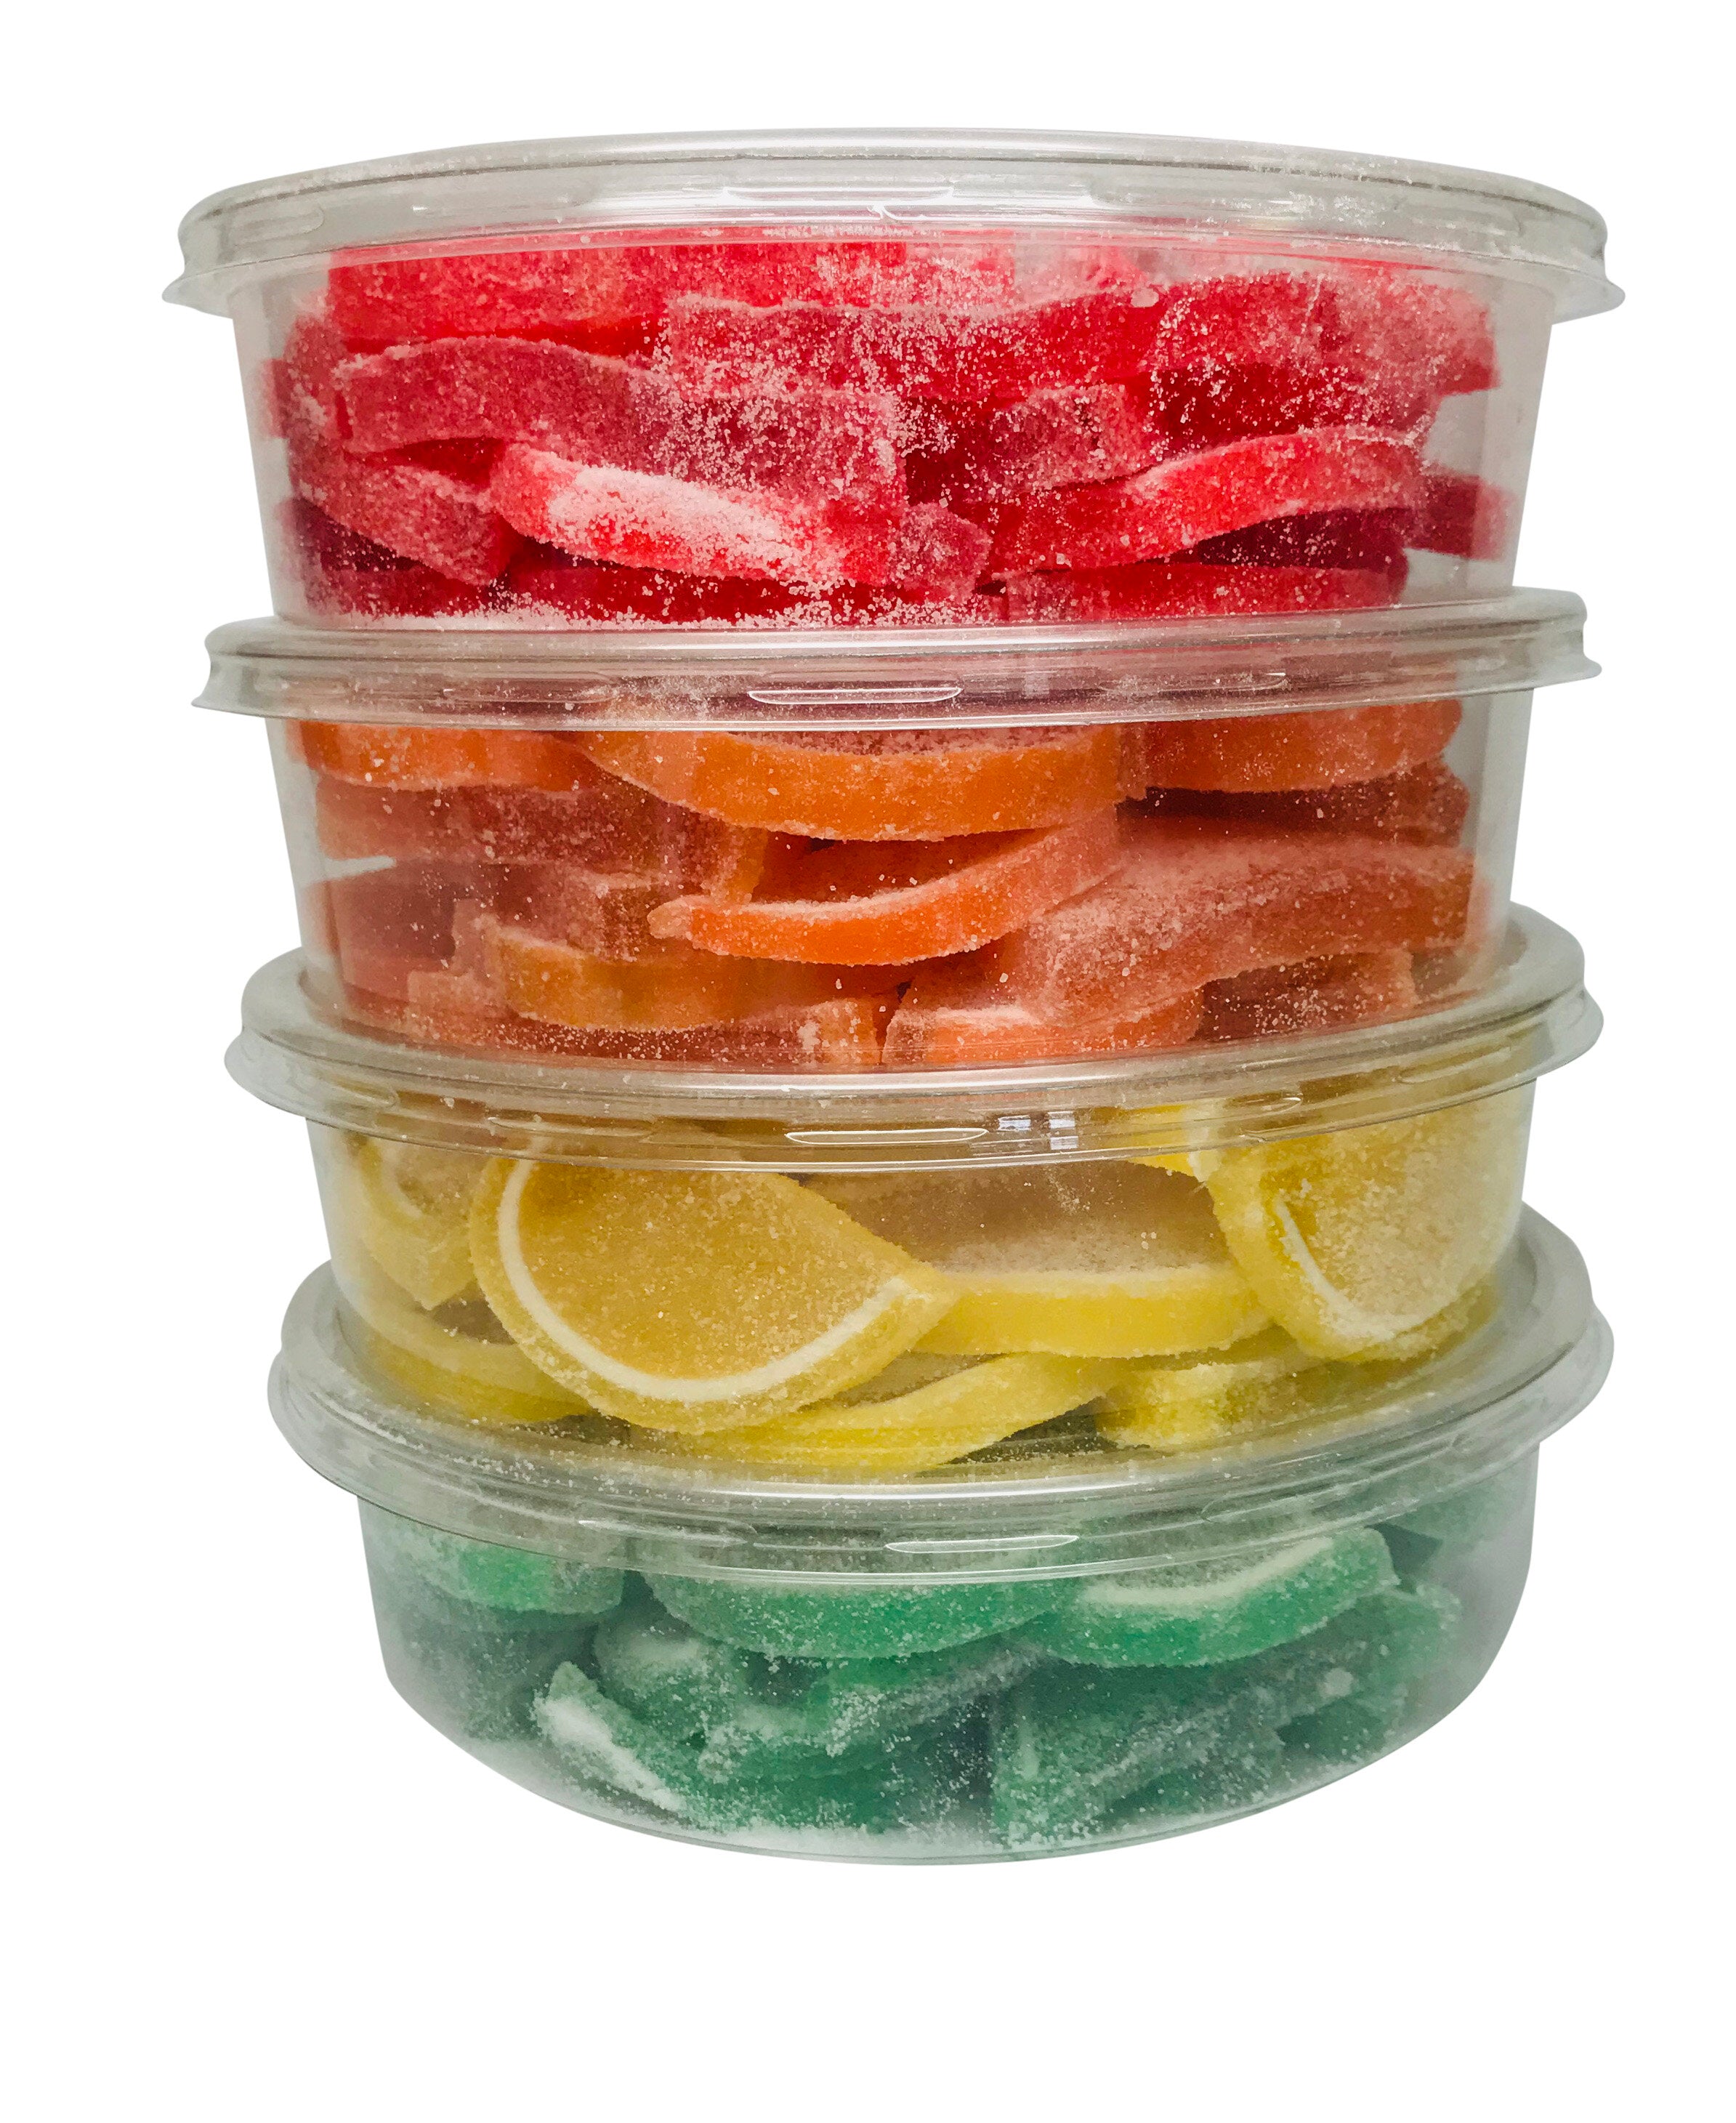 McCormicks - Mini Fruit Slices - Gummies - Bulk Candy, 2.5 Kilogram :  : Grocery & Gourmet Food